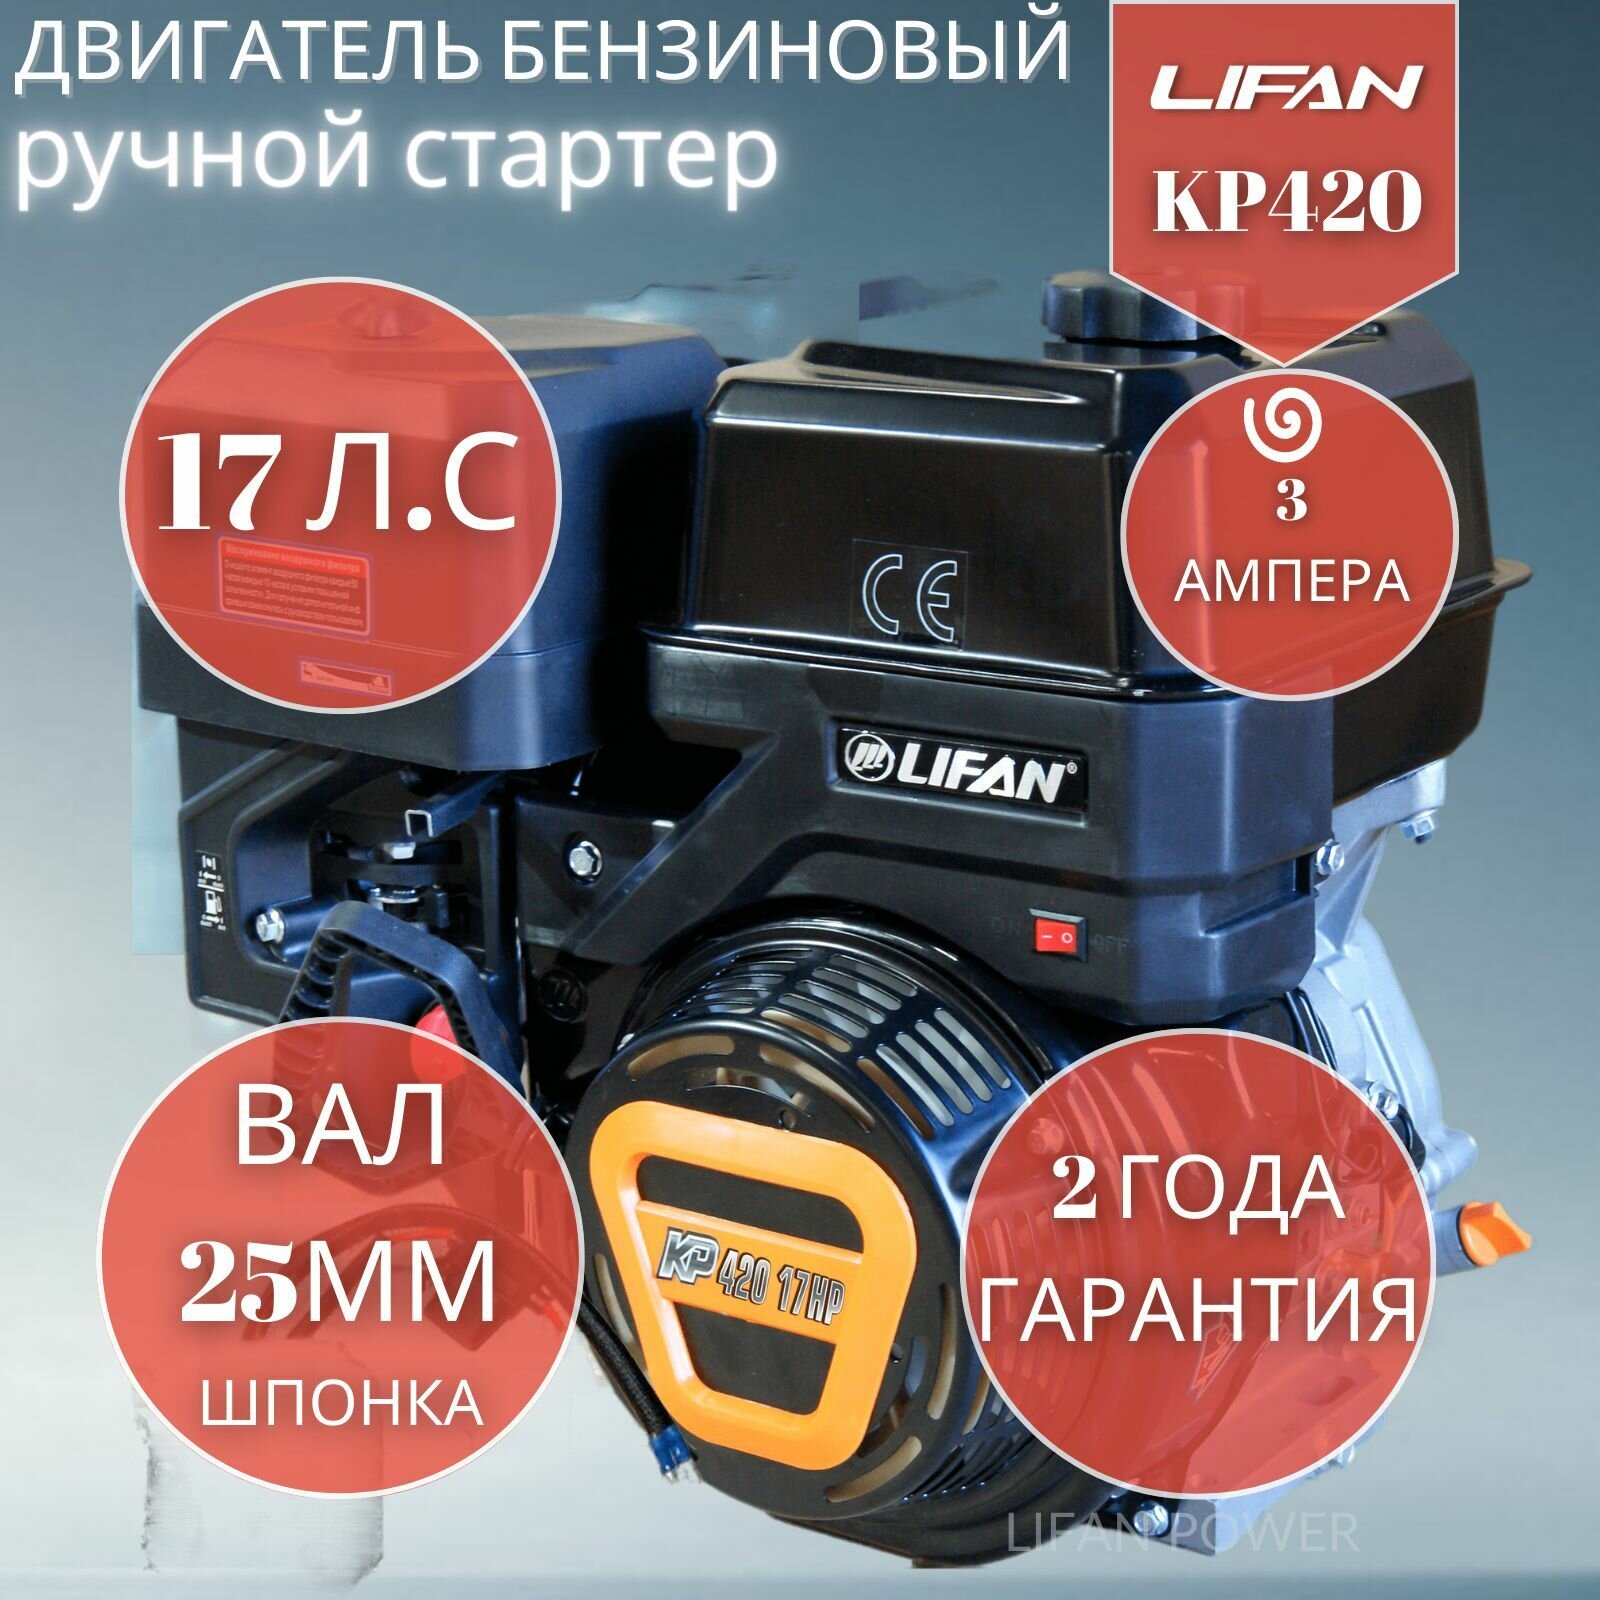 Бензиновый двигатель LIFAN KP420 (190F 2T) 3А 17 л.с.